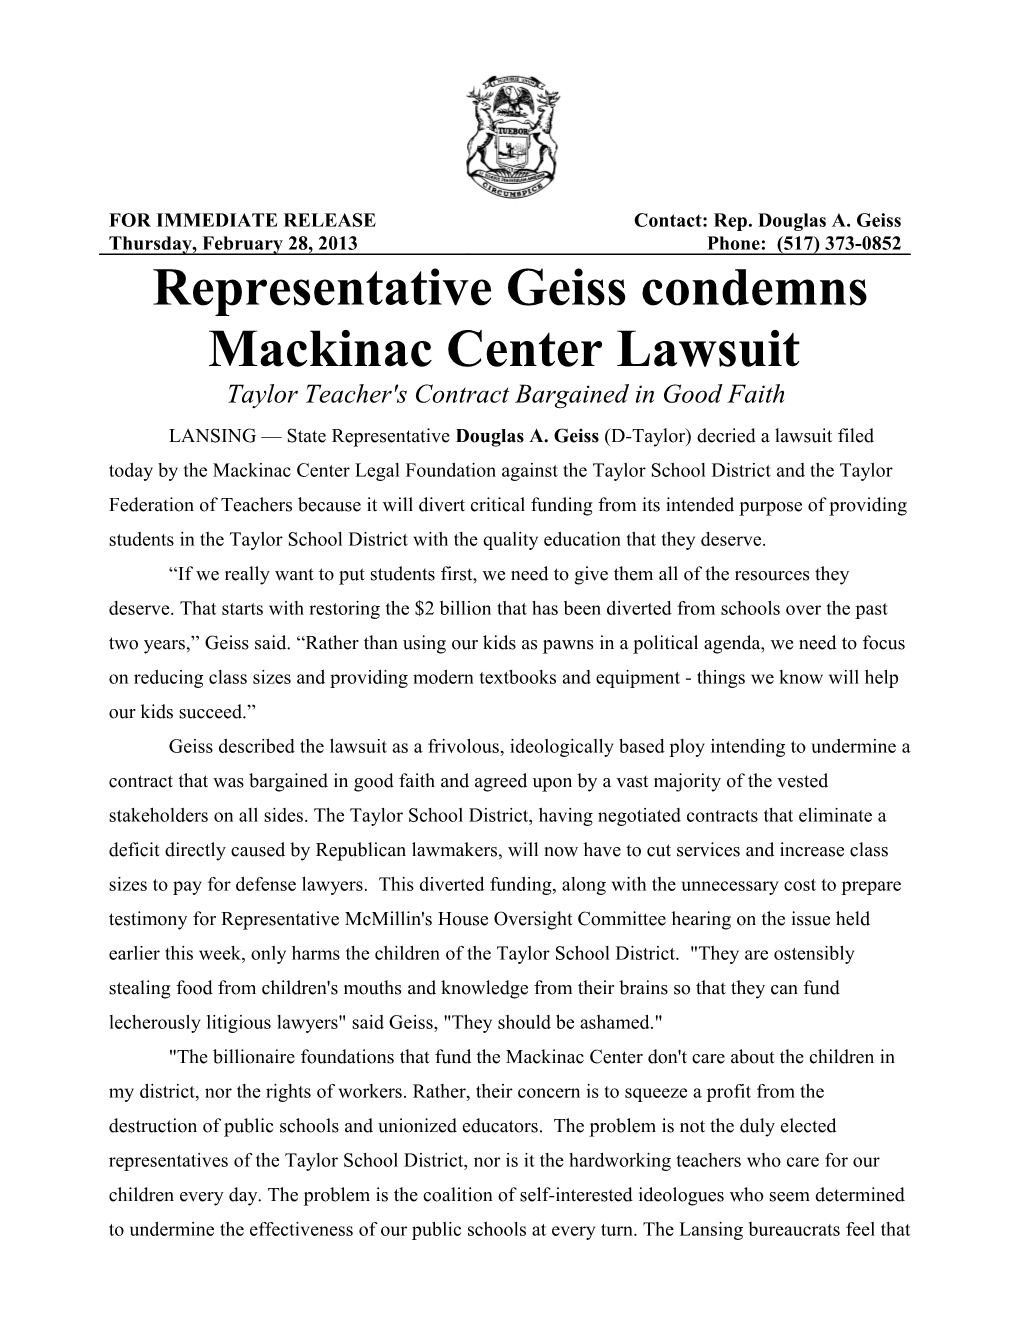 Representative Geiss Condemns Mackinac Center Lawsuit